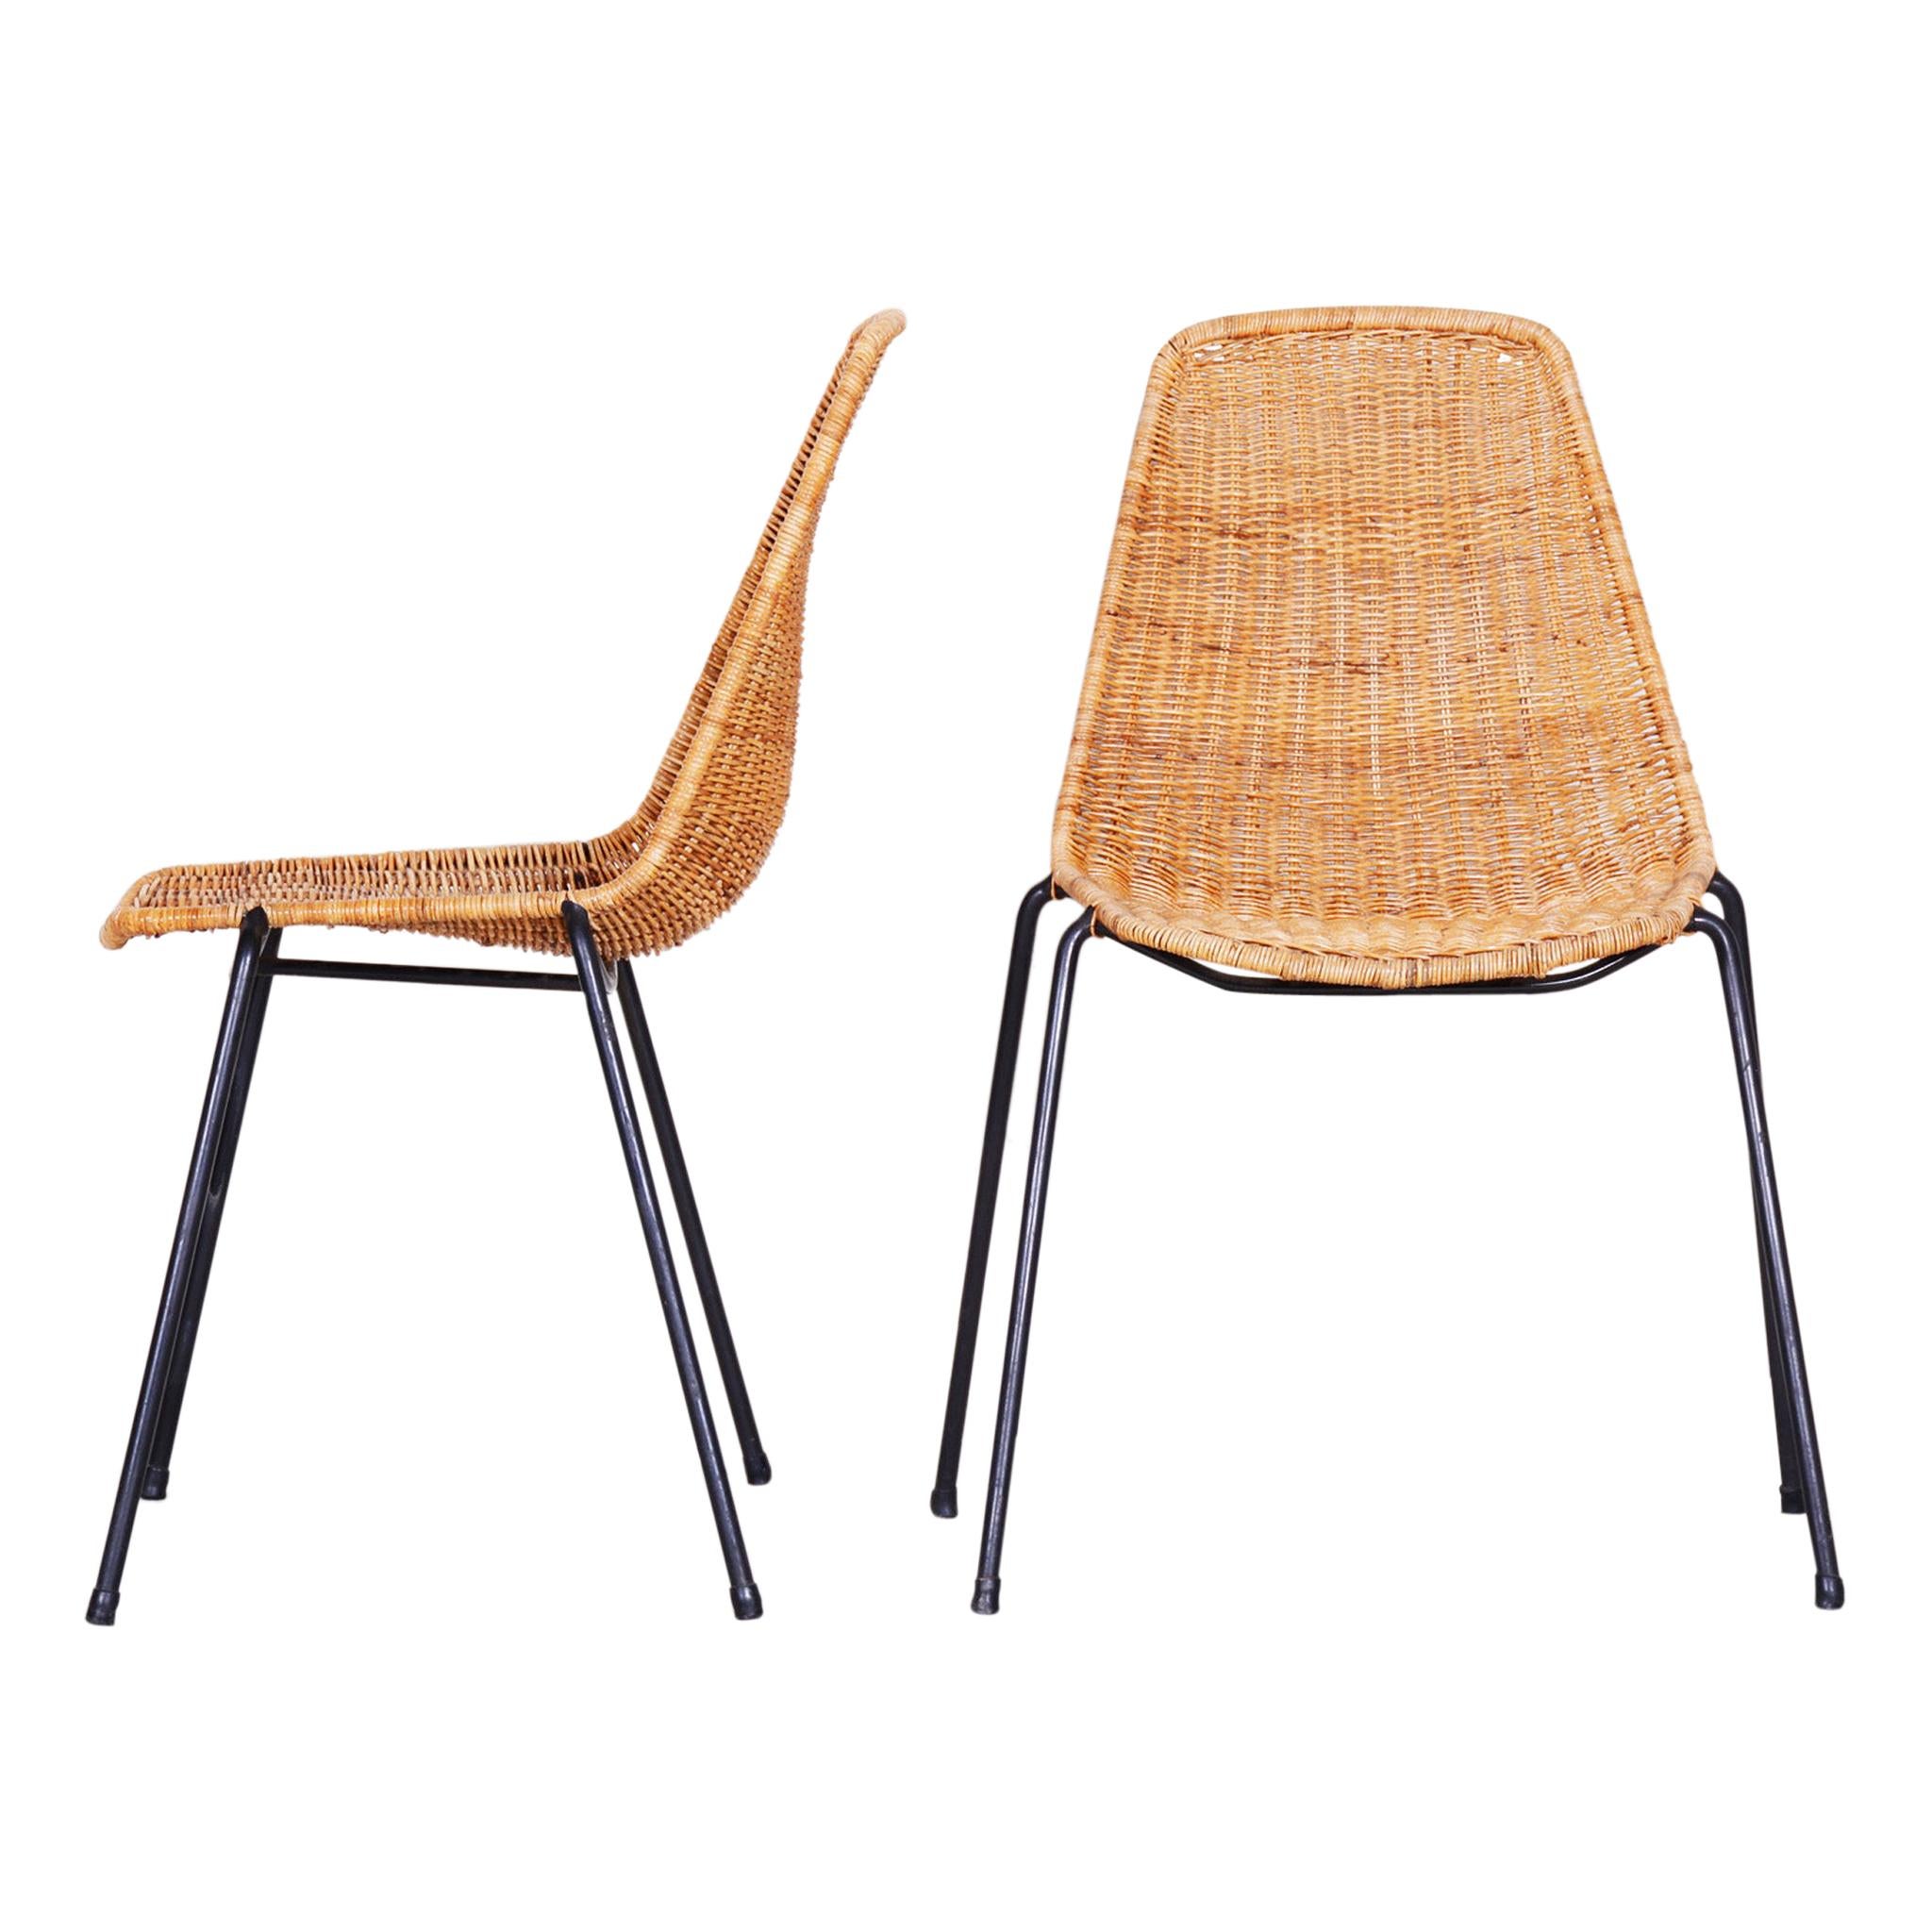 Pair of Scandinavian Midcentury Chairs, 1960s, Rattan-Metal, Original Condition